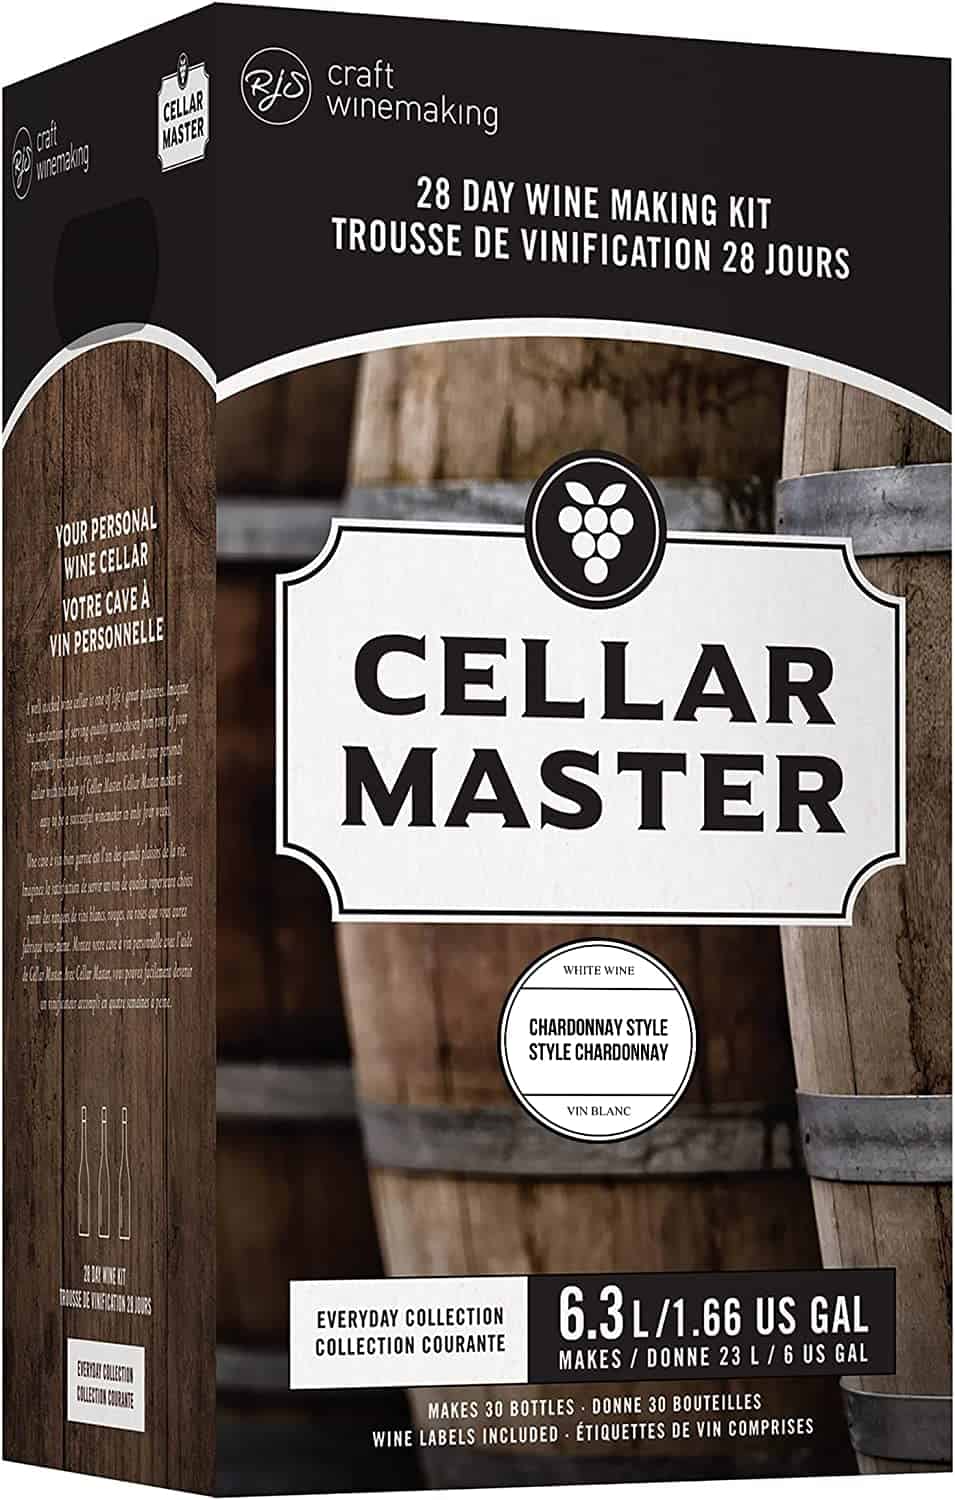 Cellar Master chardonnay kit